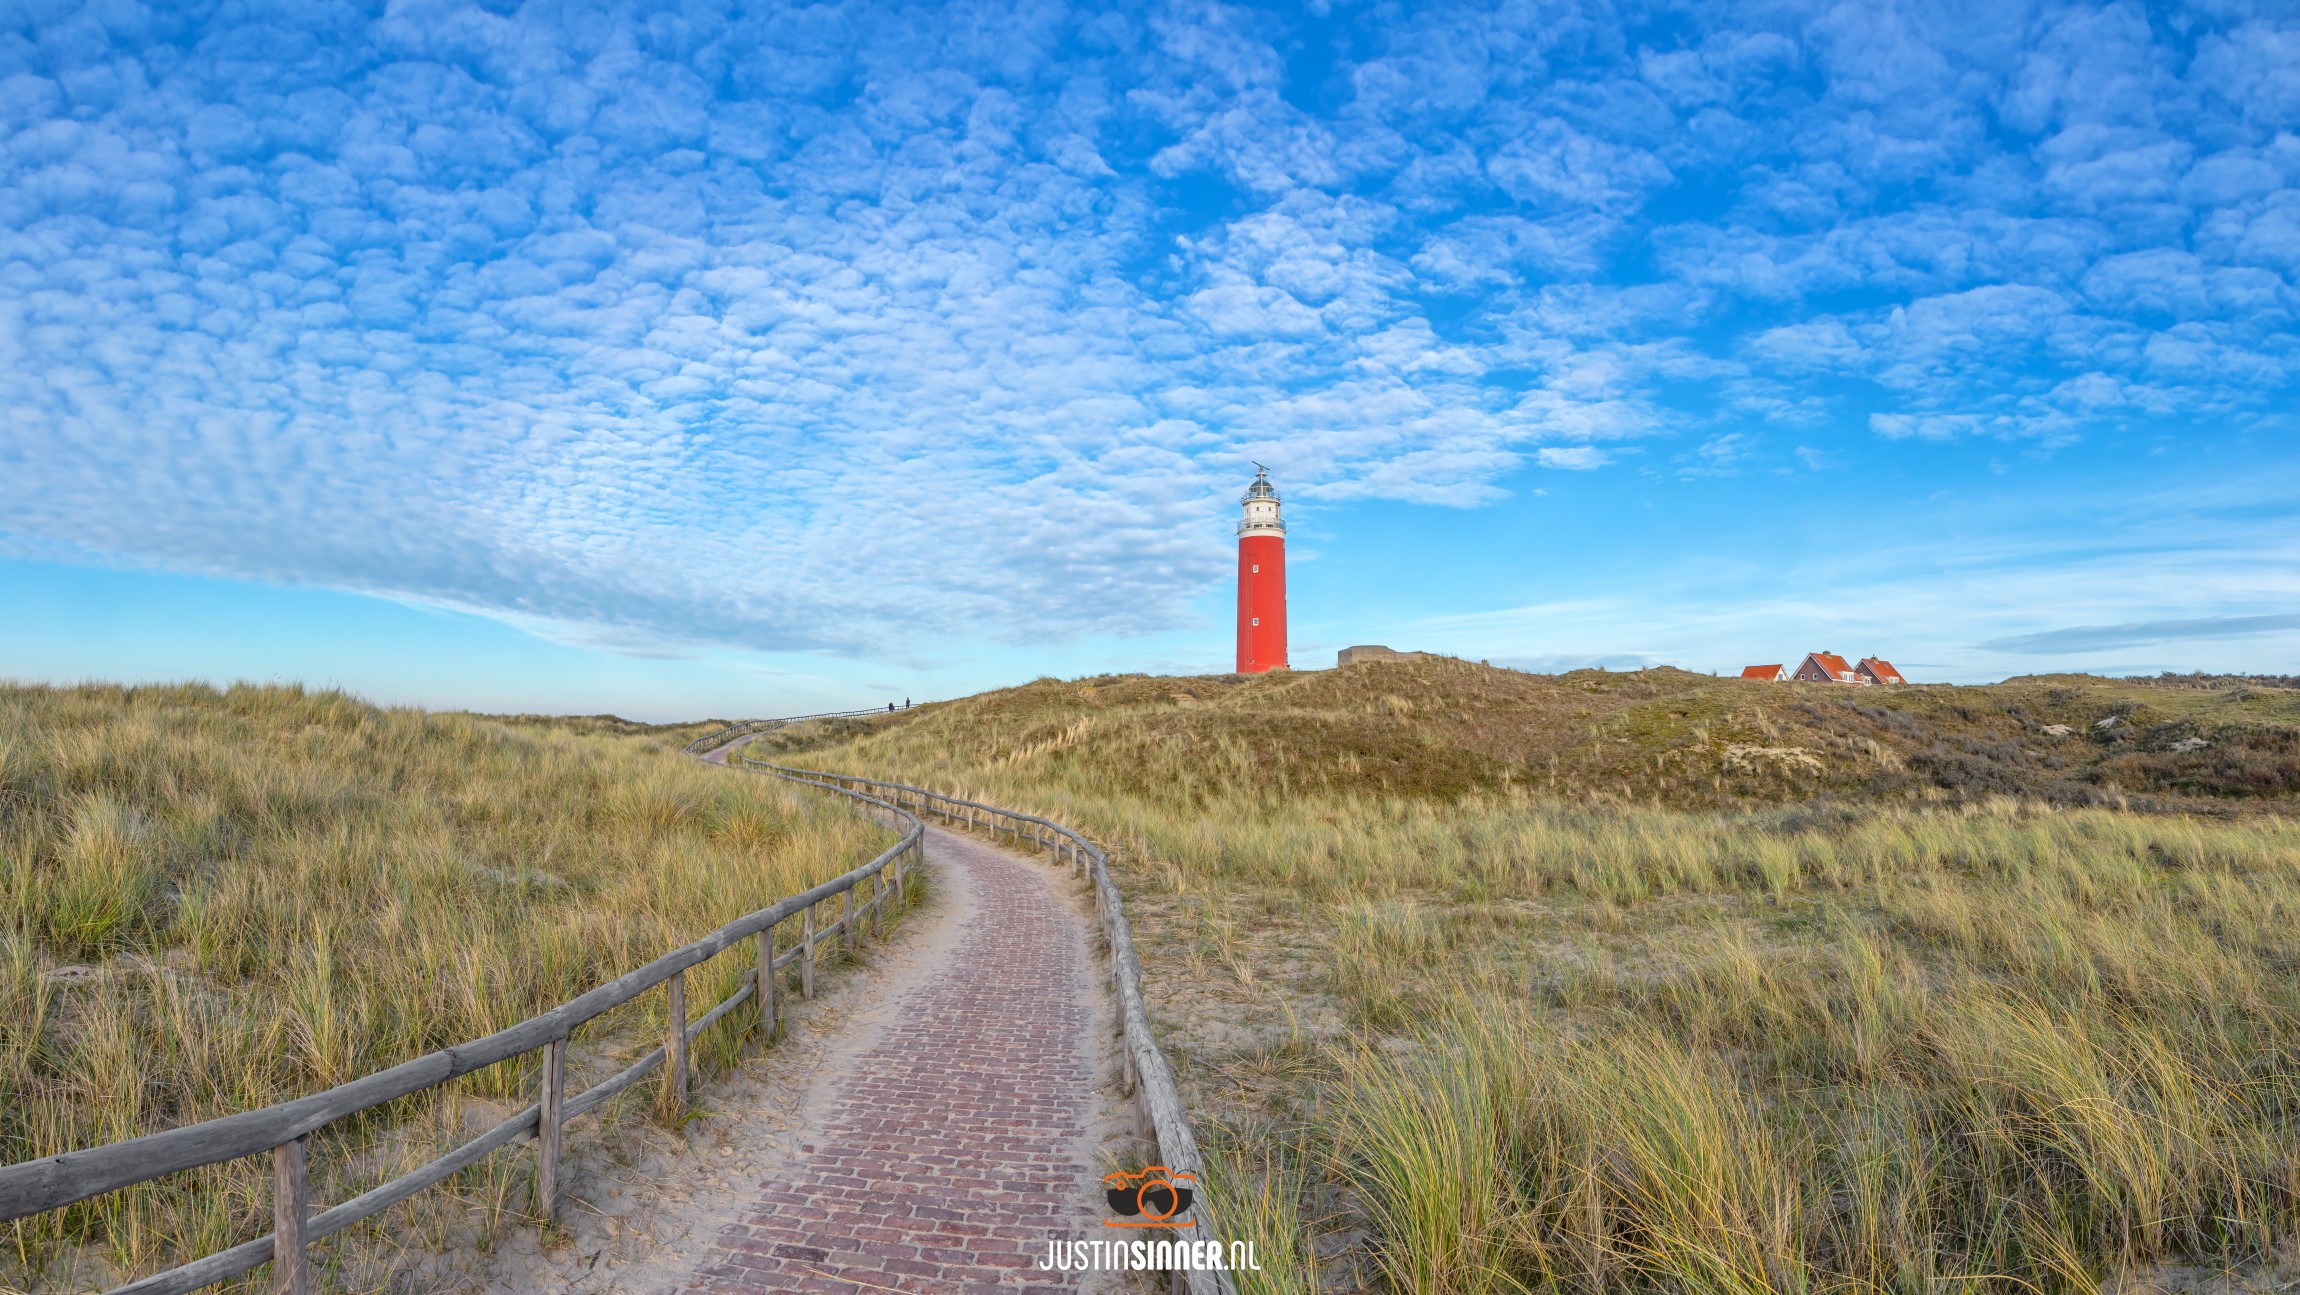 Panorama foto van het strand en de vuurtoren van Texel / Panoramic photo of Texel beach and lighthouse